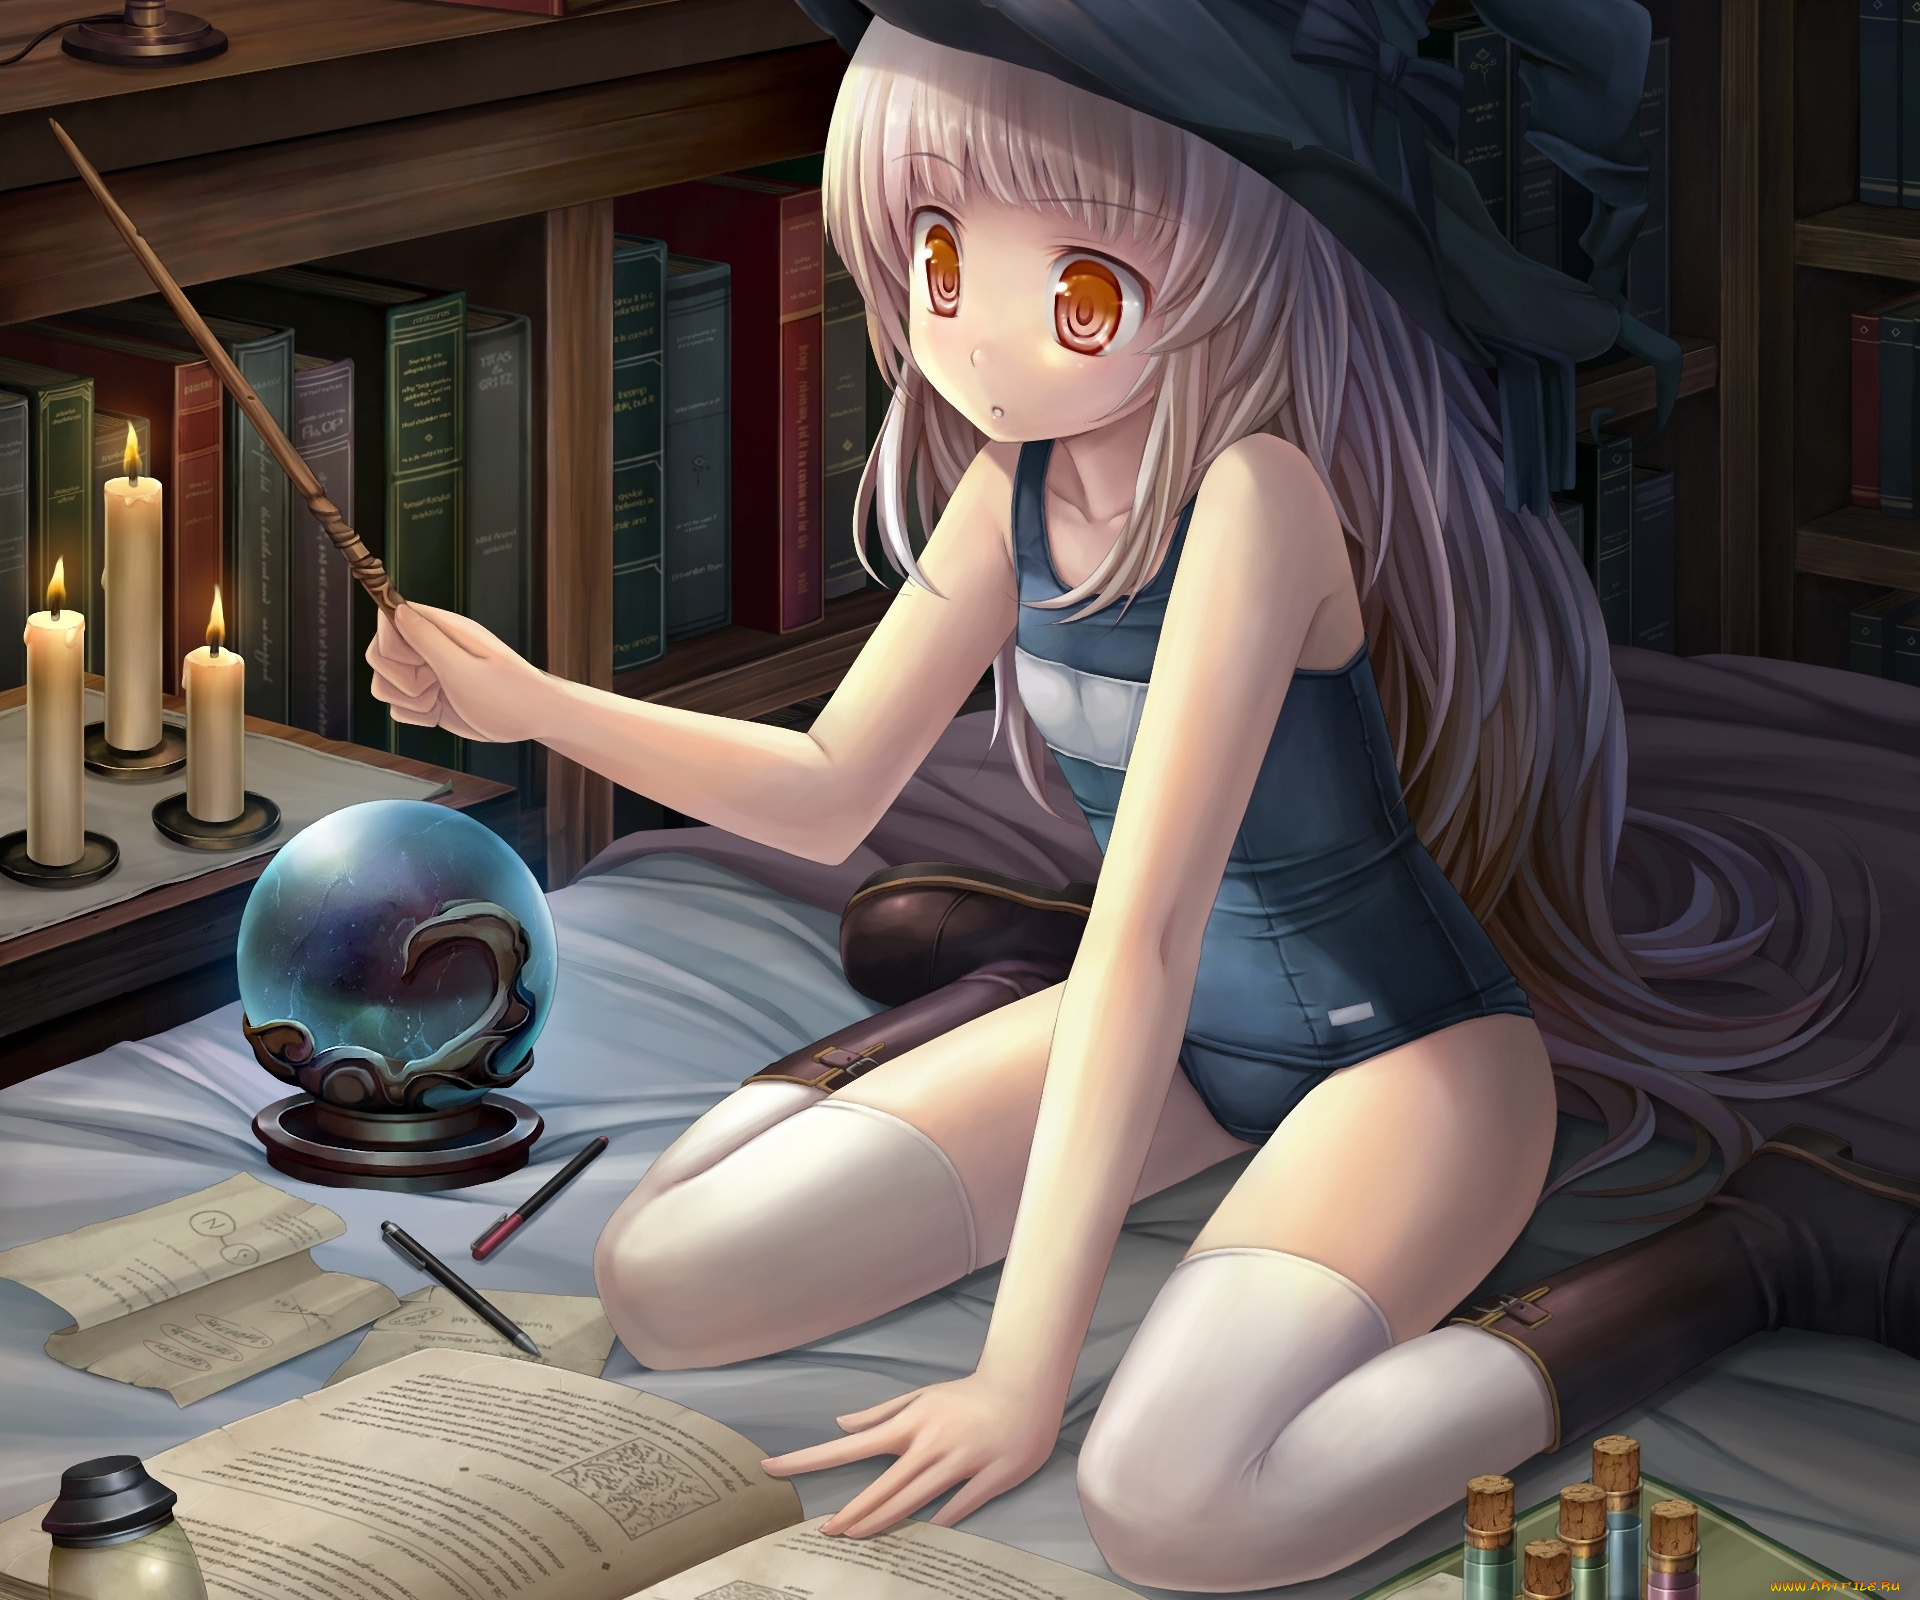 аниме, halloween, magic, девочка, книги, палочка, шар, сфера, свечи, постель, ведьма, шляпа